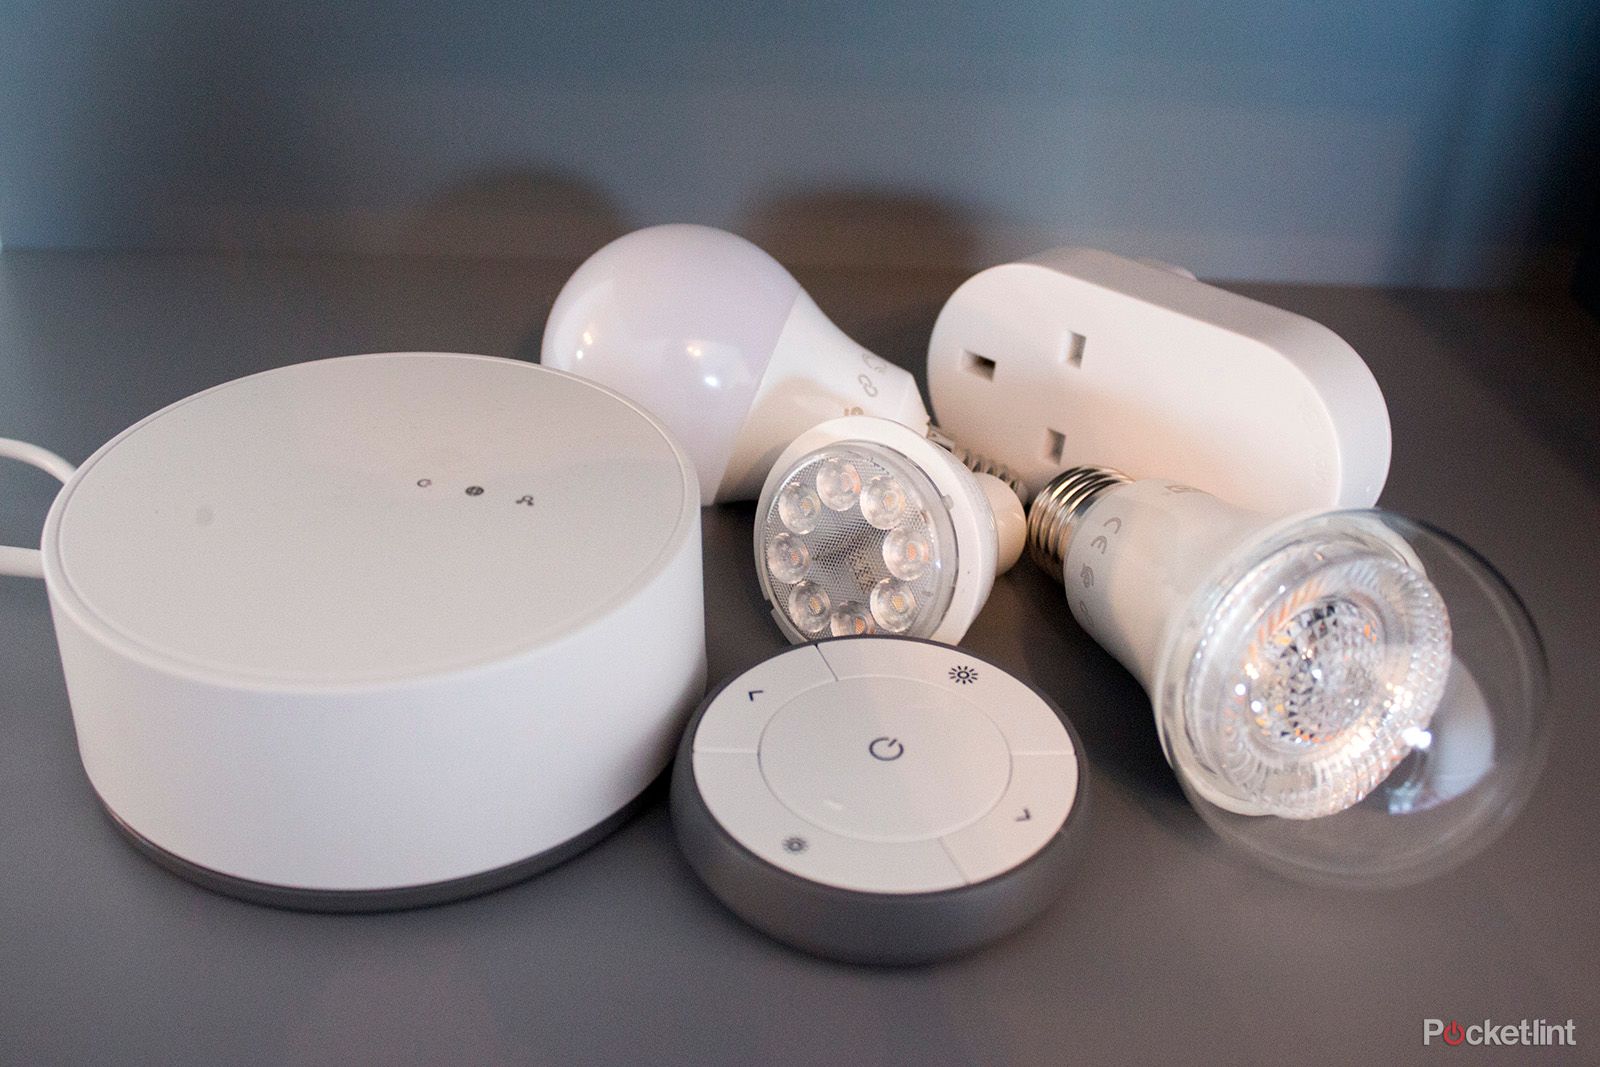 Ikea Tradfri lighting and smart plugs